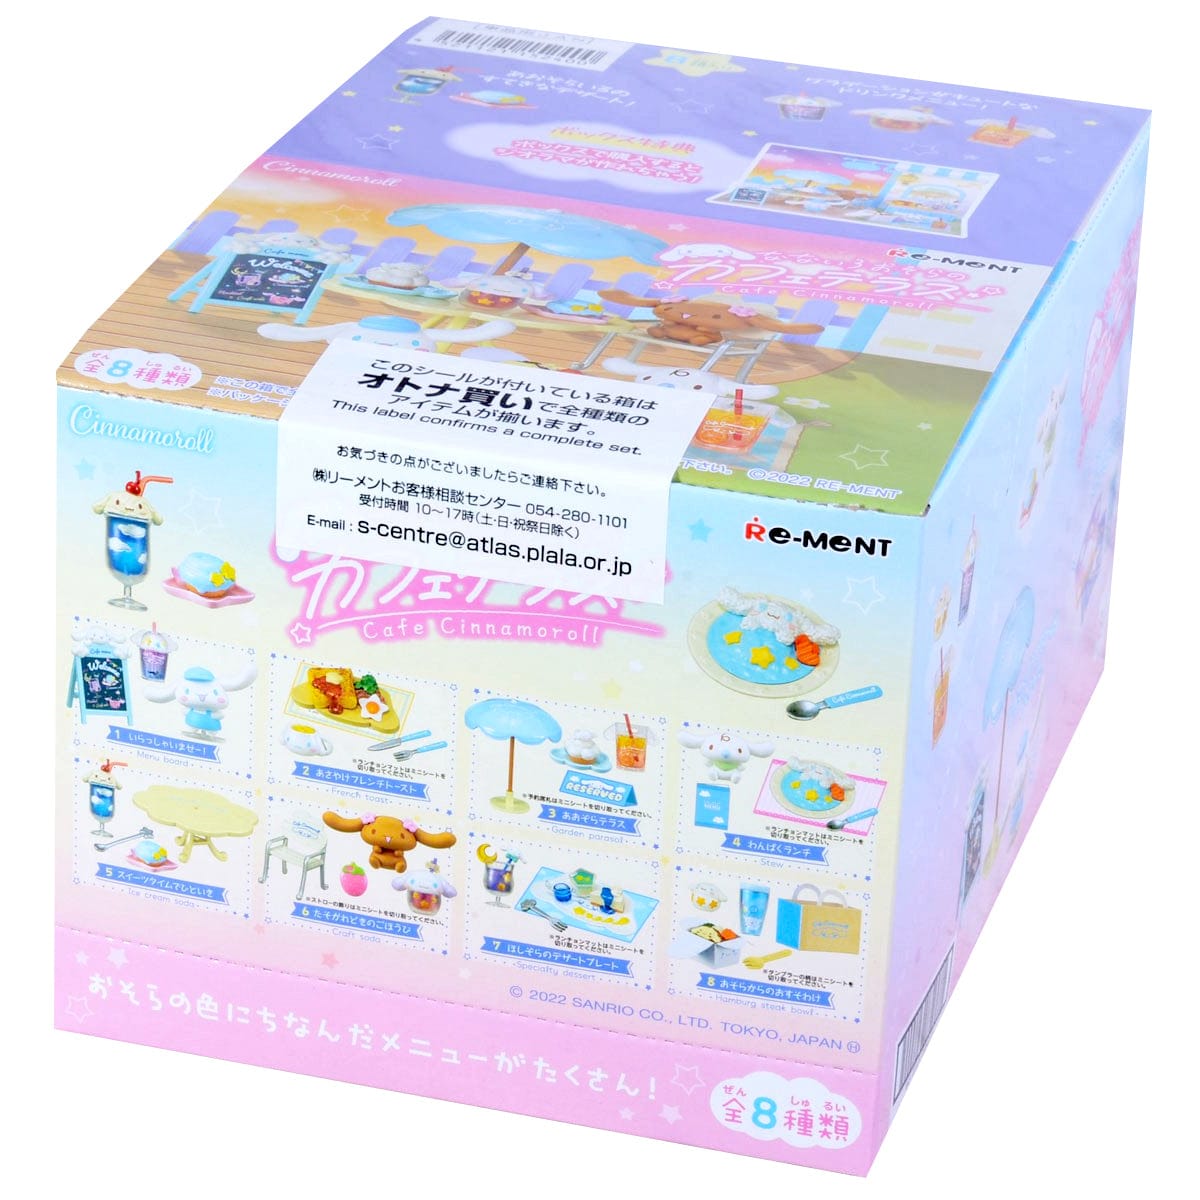 JBK Rement Sanrio Cafe Cinnamoroll Surprise Box Kawaii Gifts 4521121152400